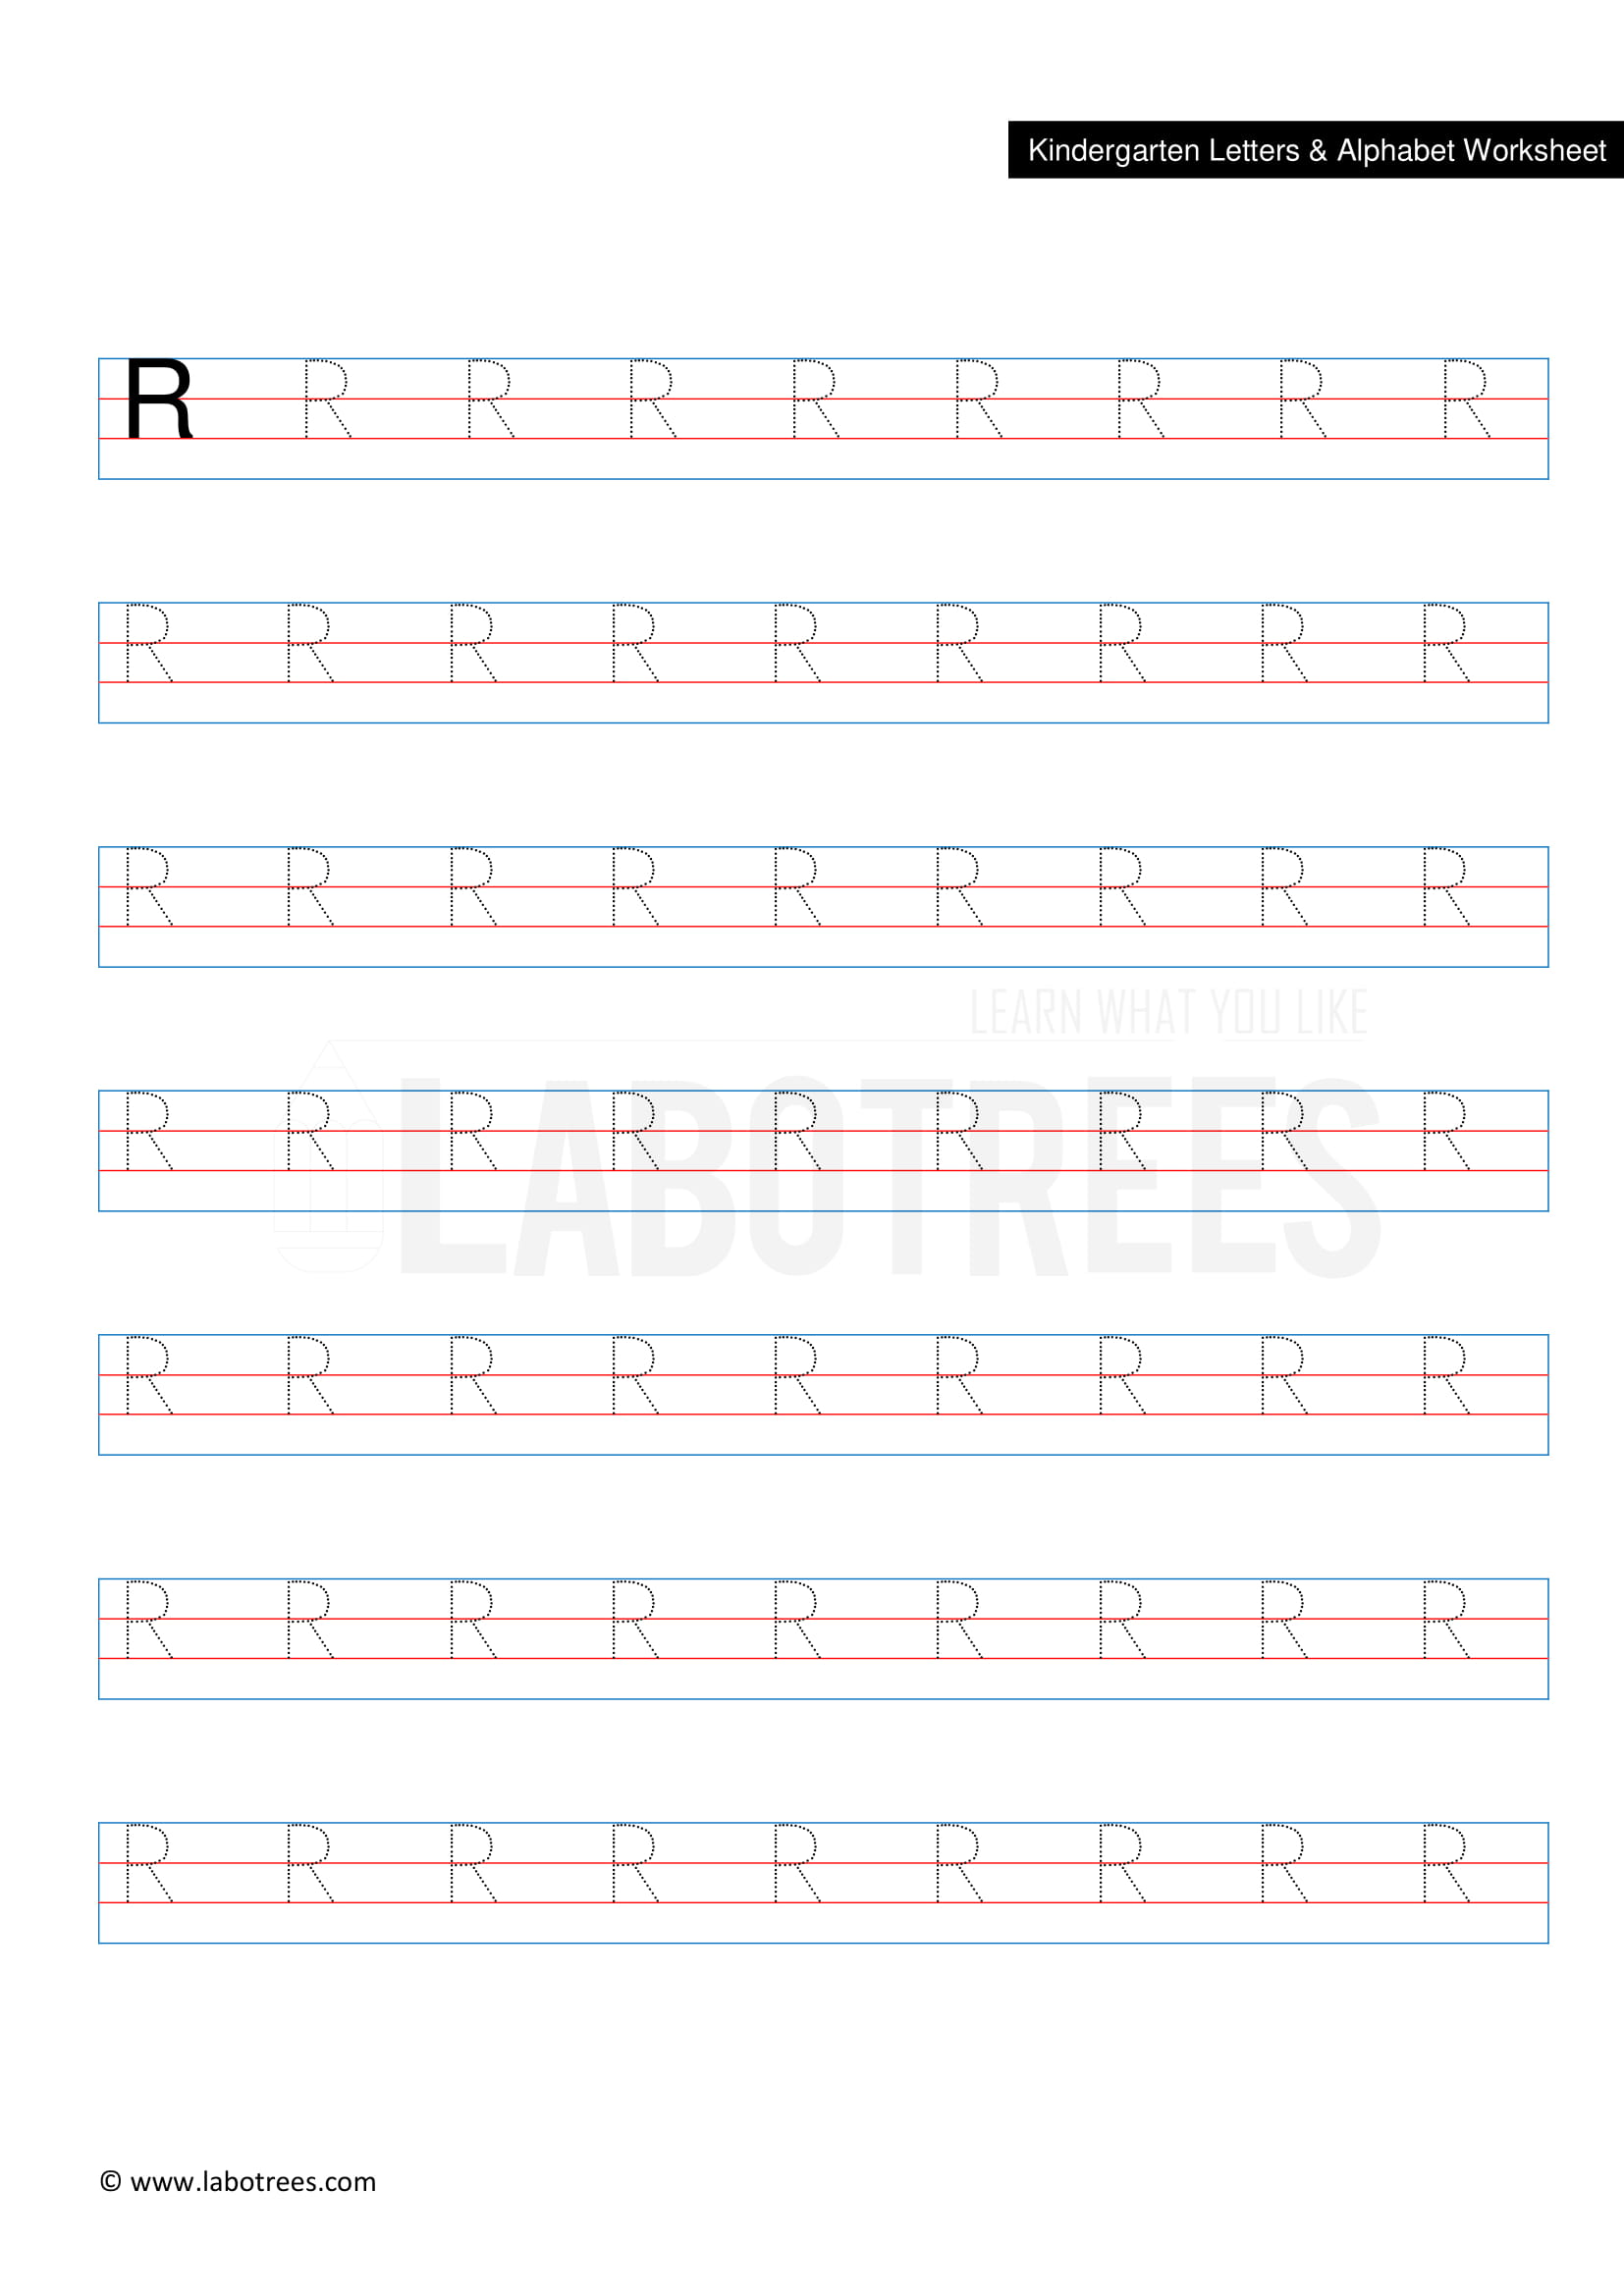 Worksheet of Letter R (Uppercase) Free Download | Labotrees | Labotrees